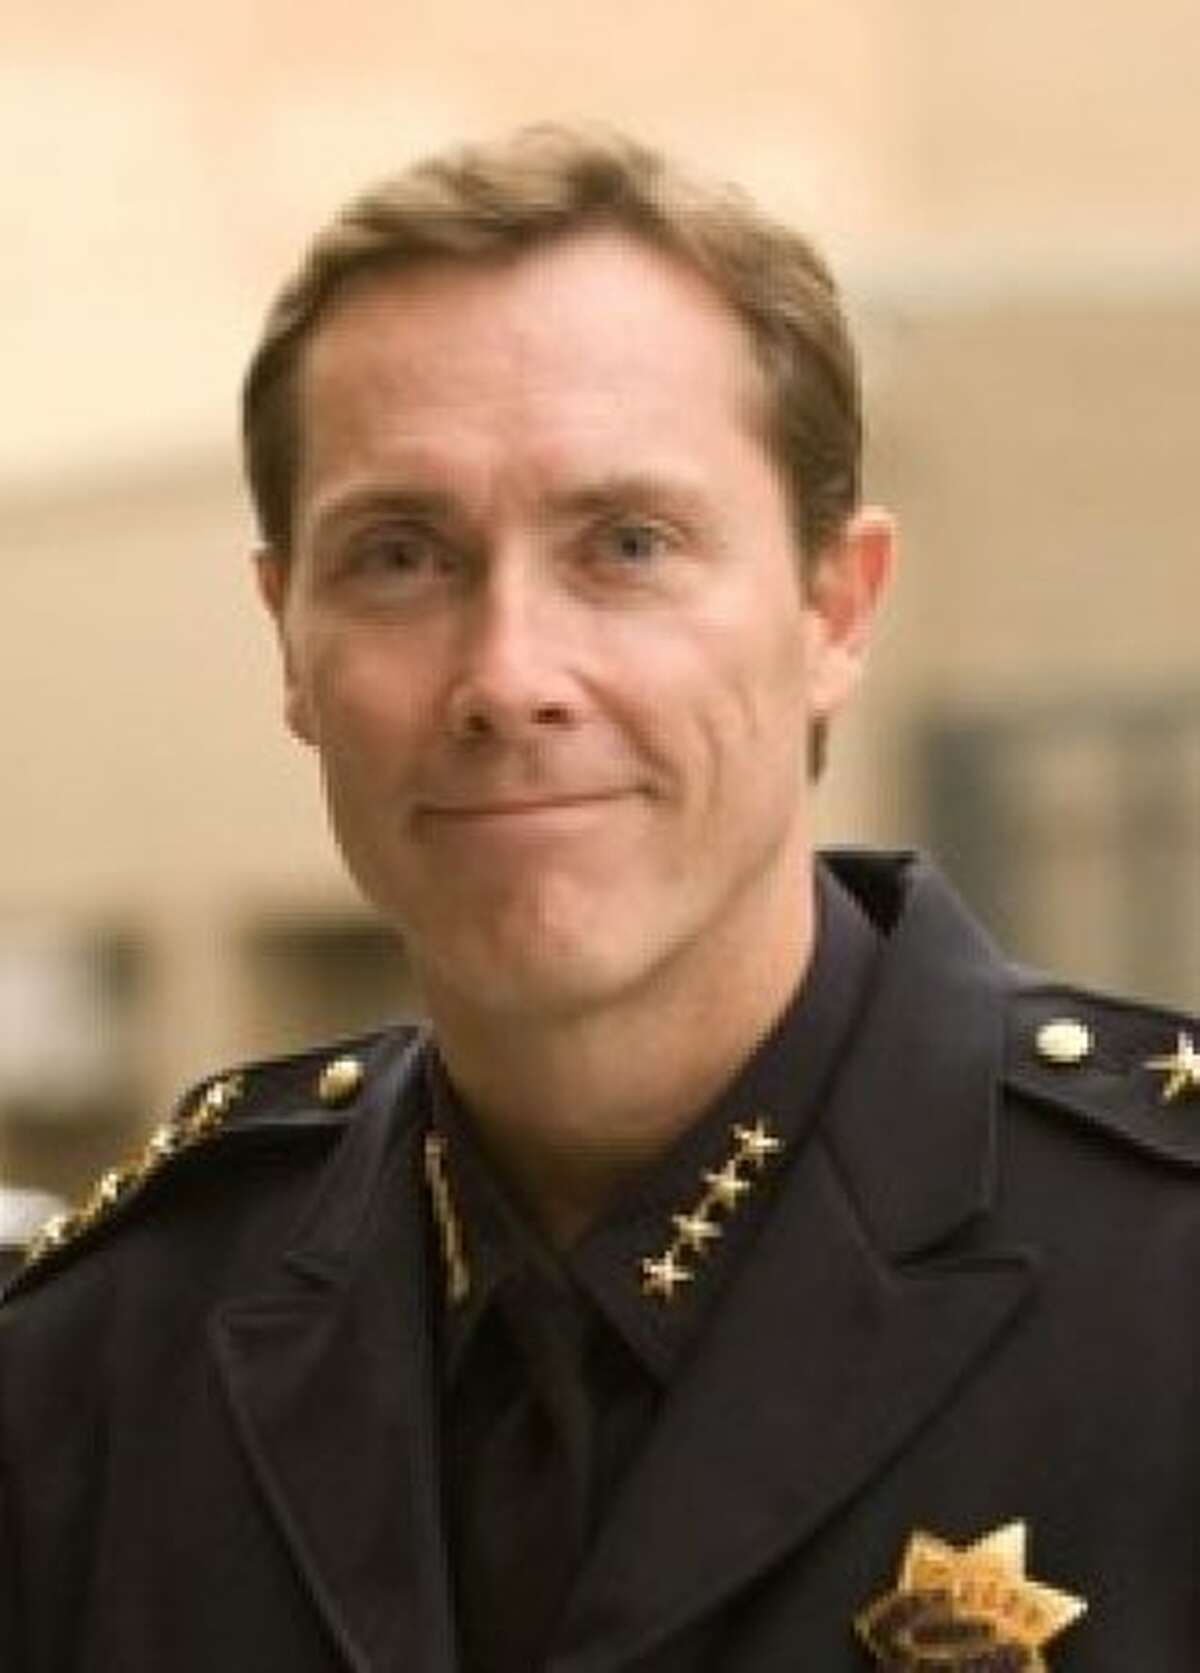 Berkeley Police Chief Michael Meehan